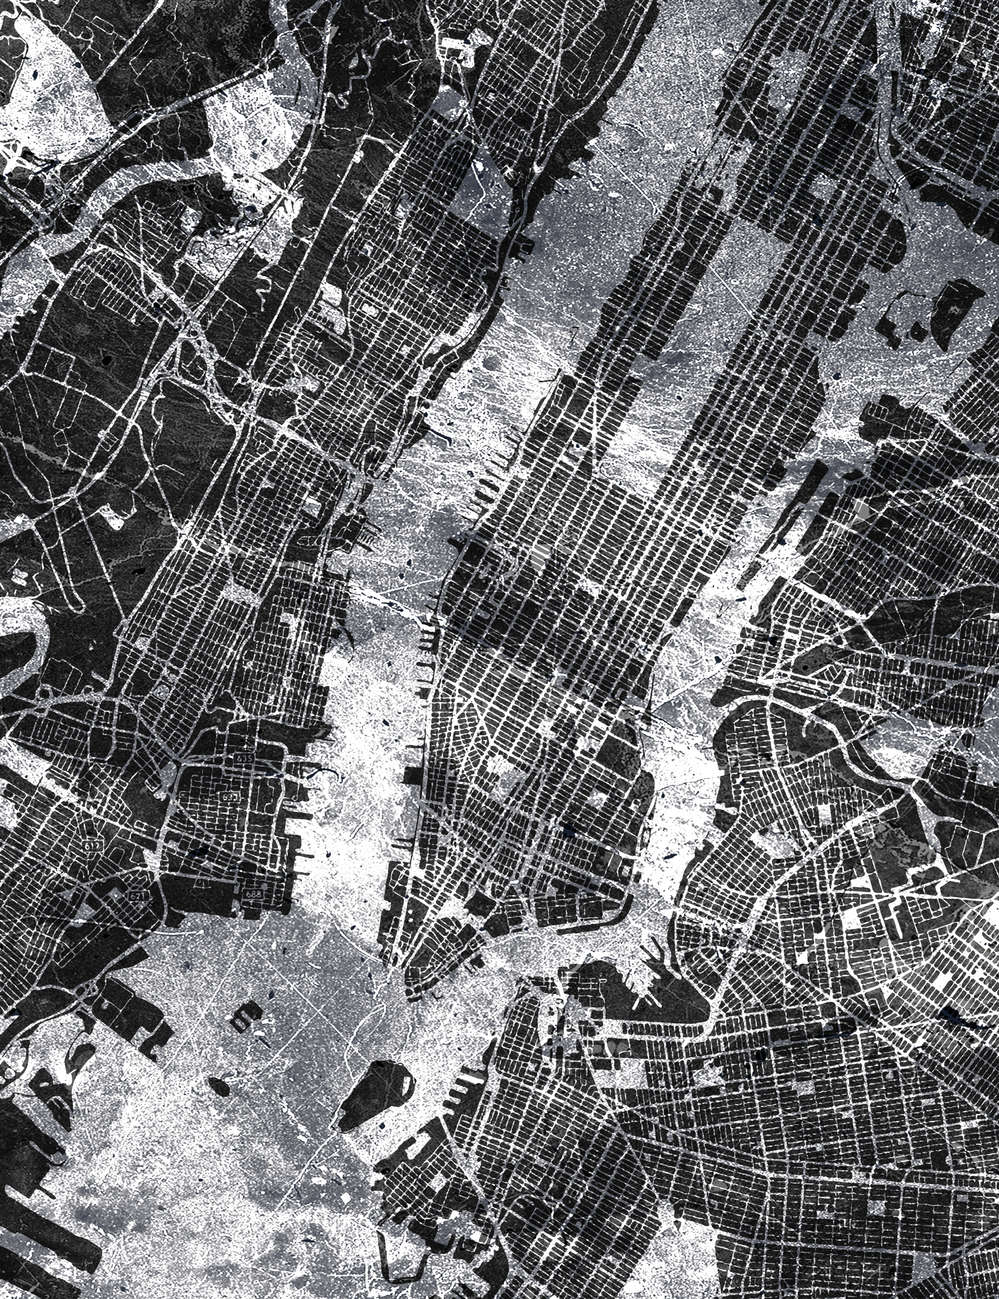             Stadsplattegrond - Zwart-wit stadsplattegrond in rustieke stijl
        